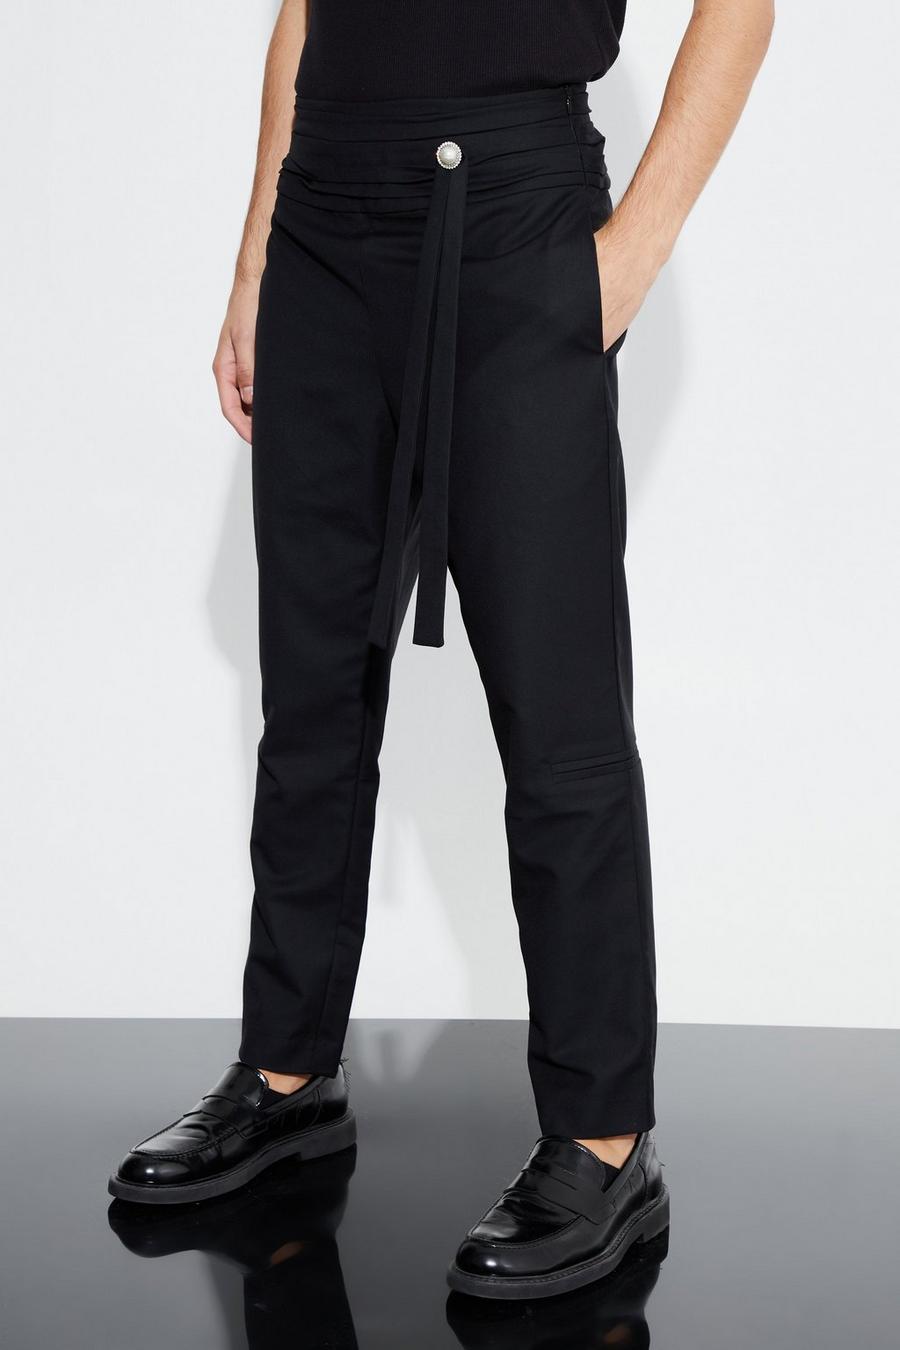 Black Relaxed Fit Trouser With Cummerbund Wrap Belt